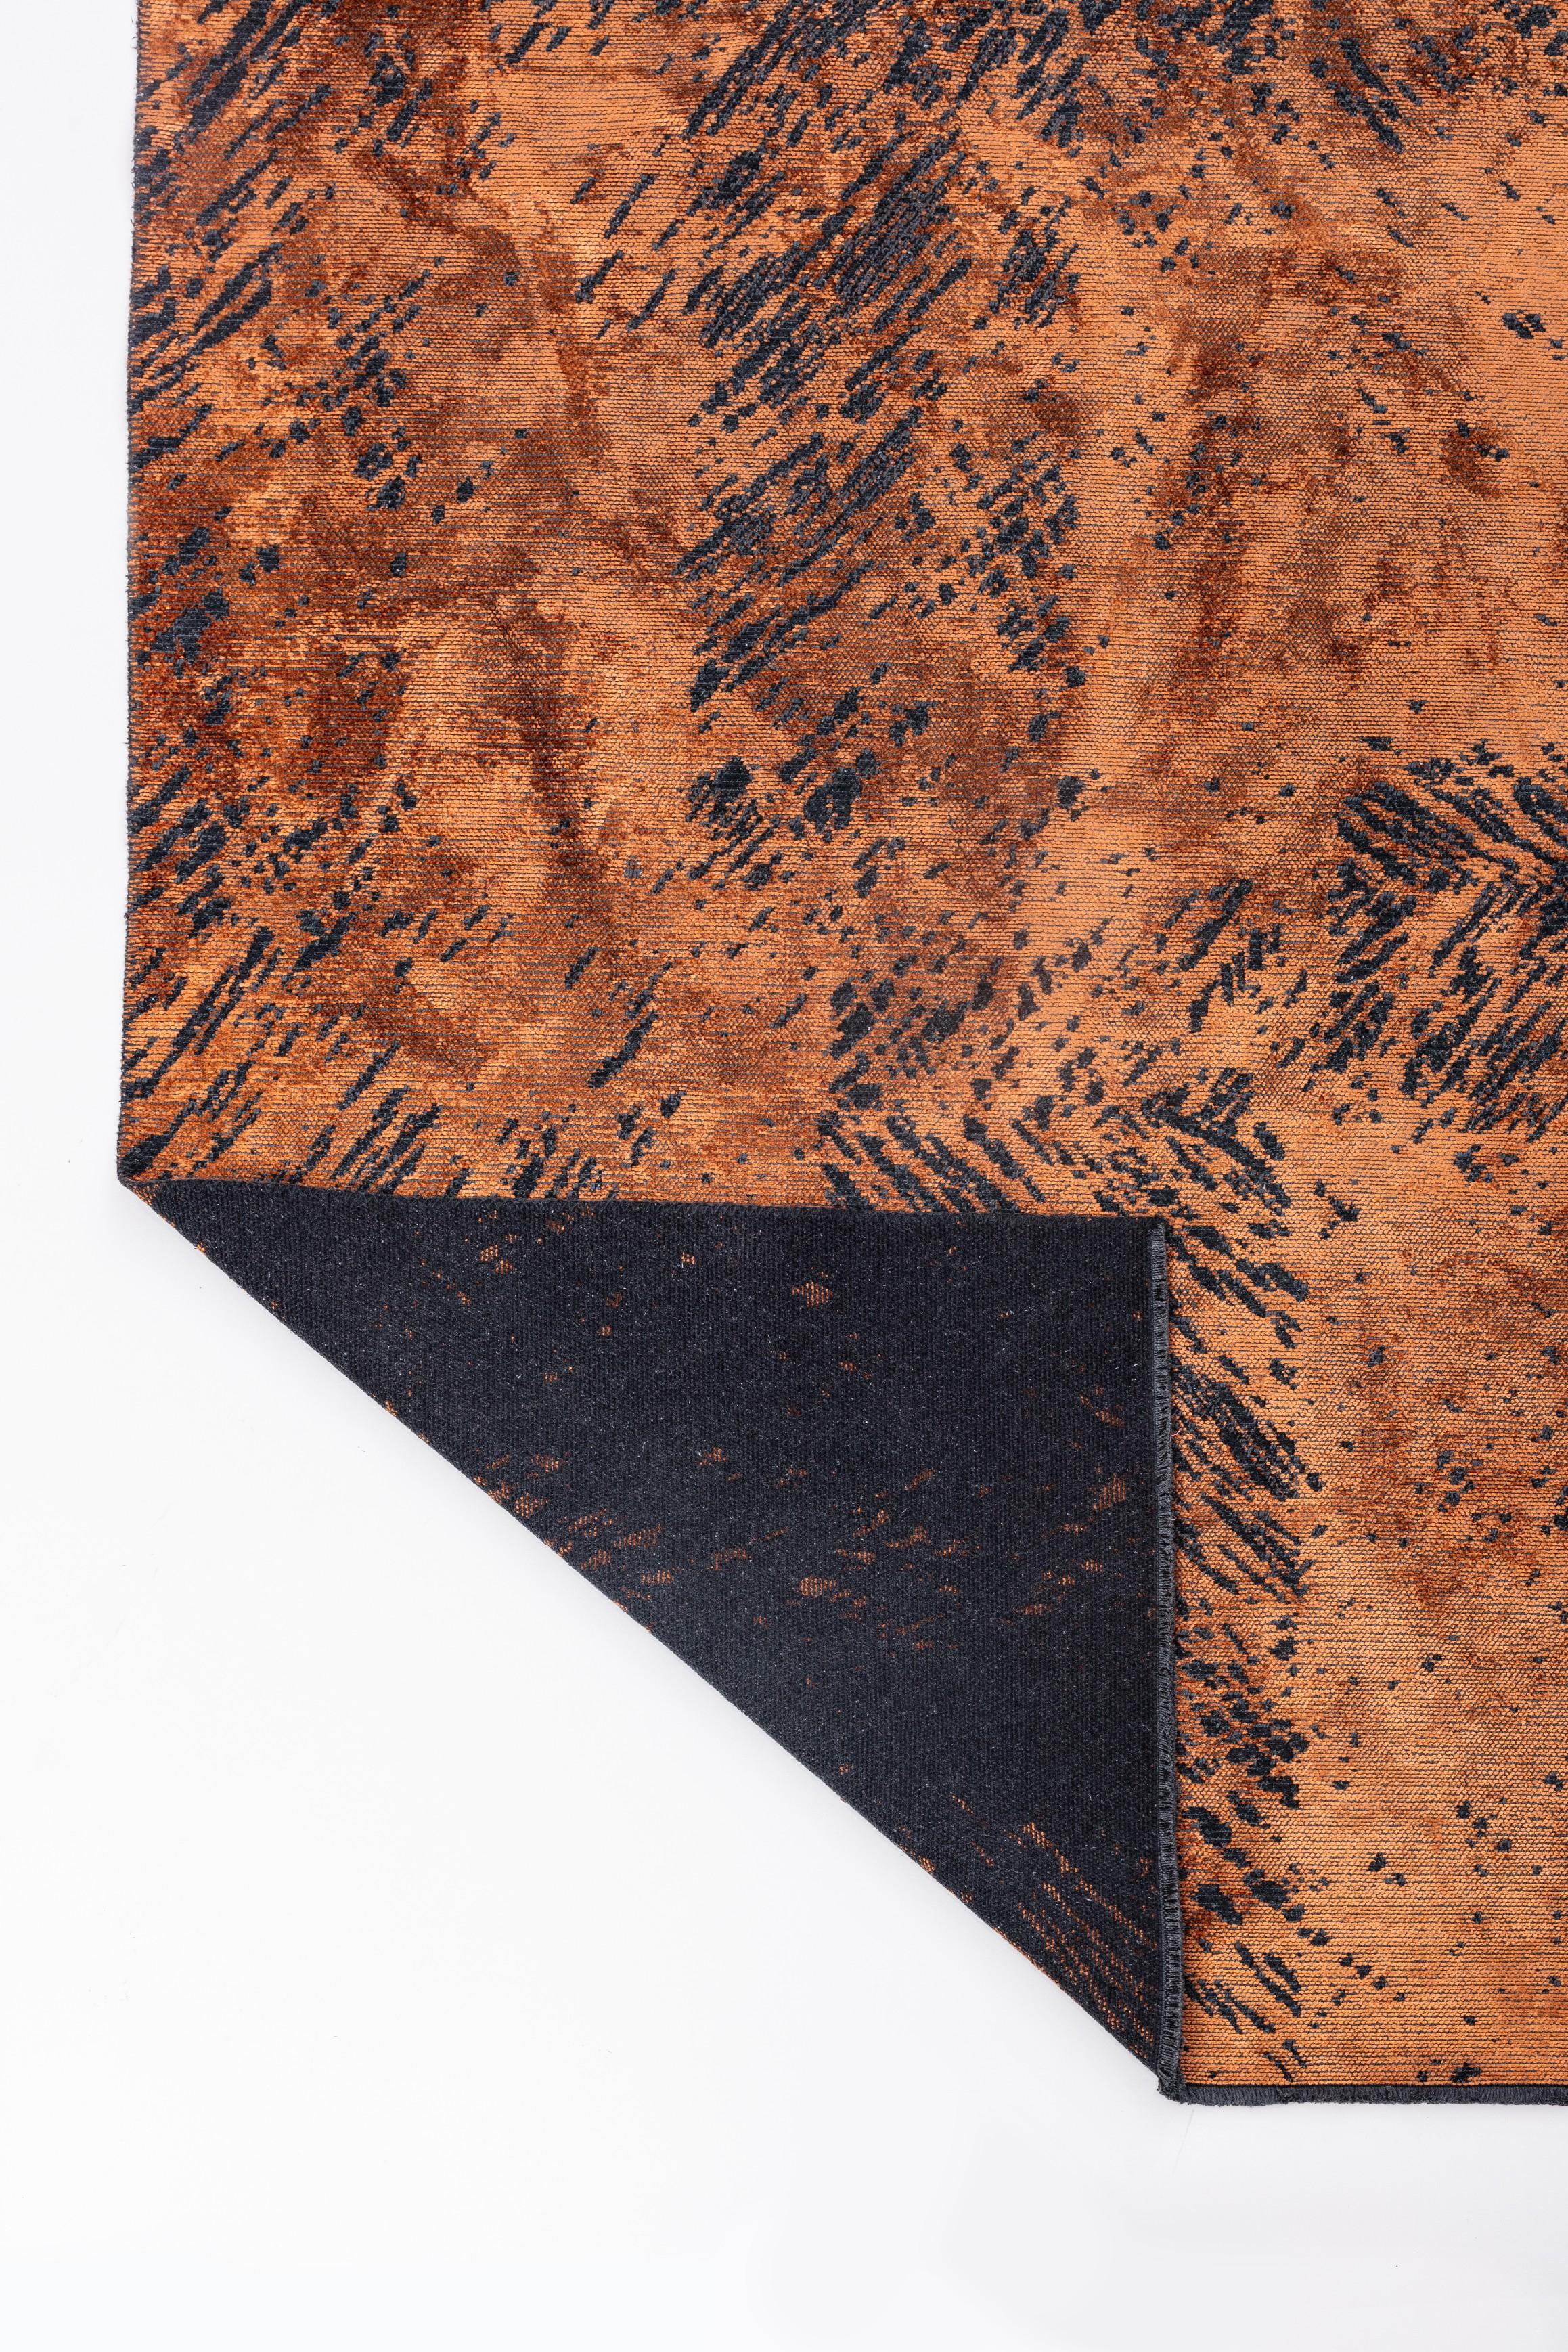 En vente :  (Orange) Moderne  Tapis de sol abstrait de luxe 3